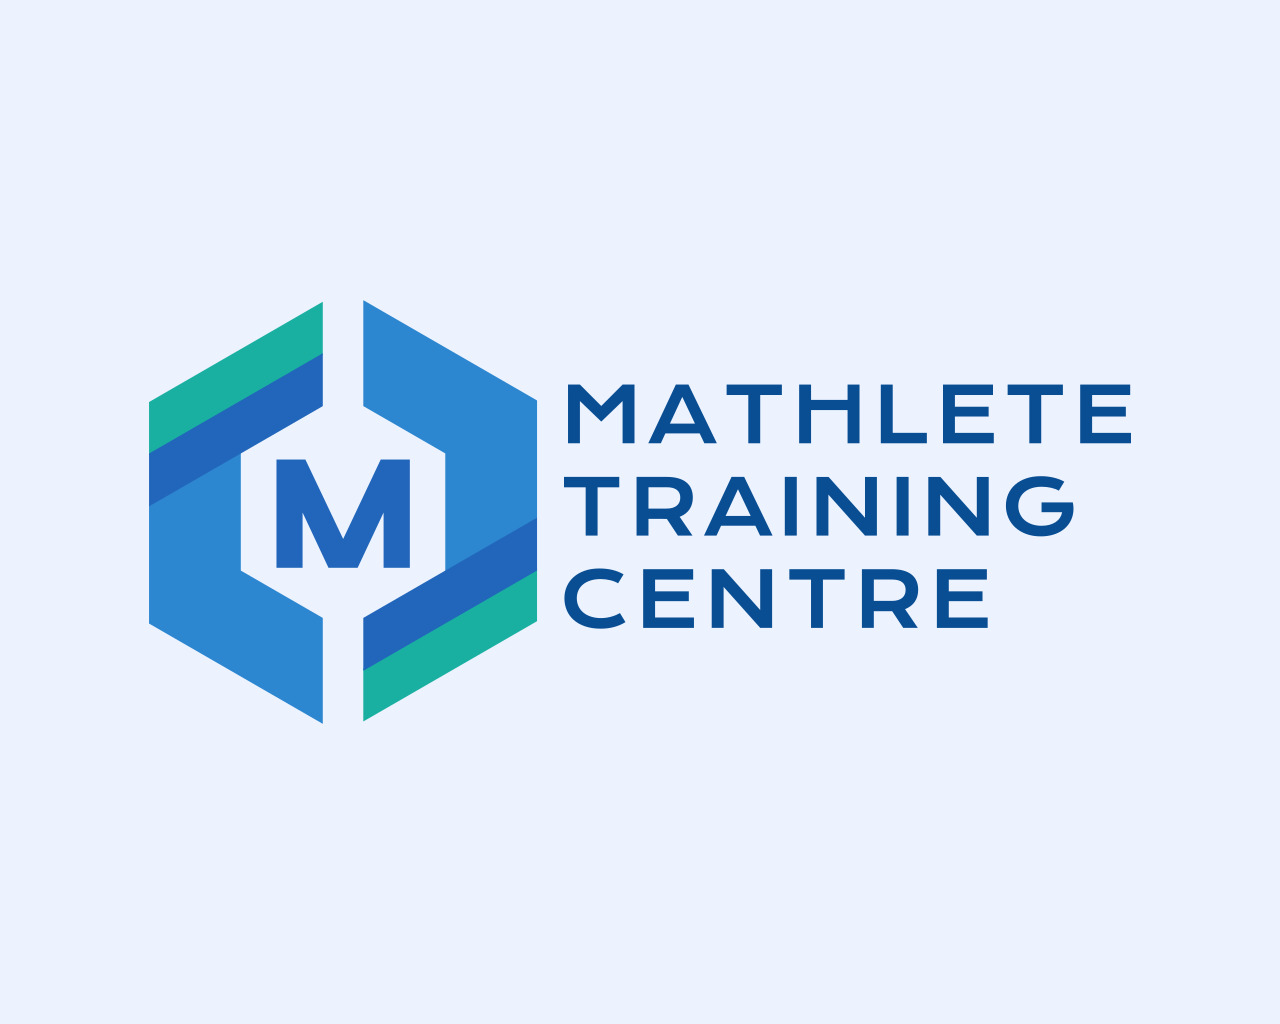 Mathlete Training Centre company logo